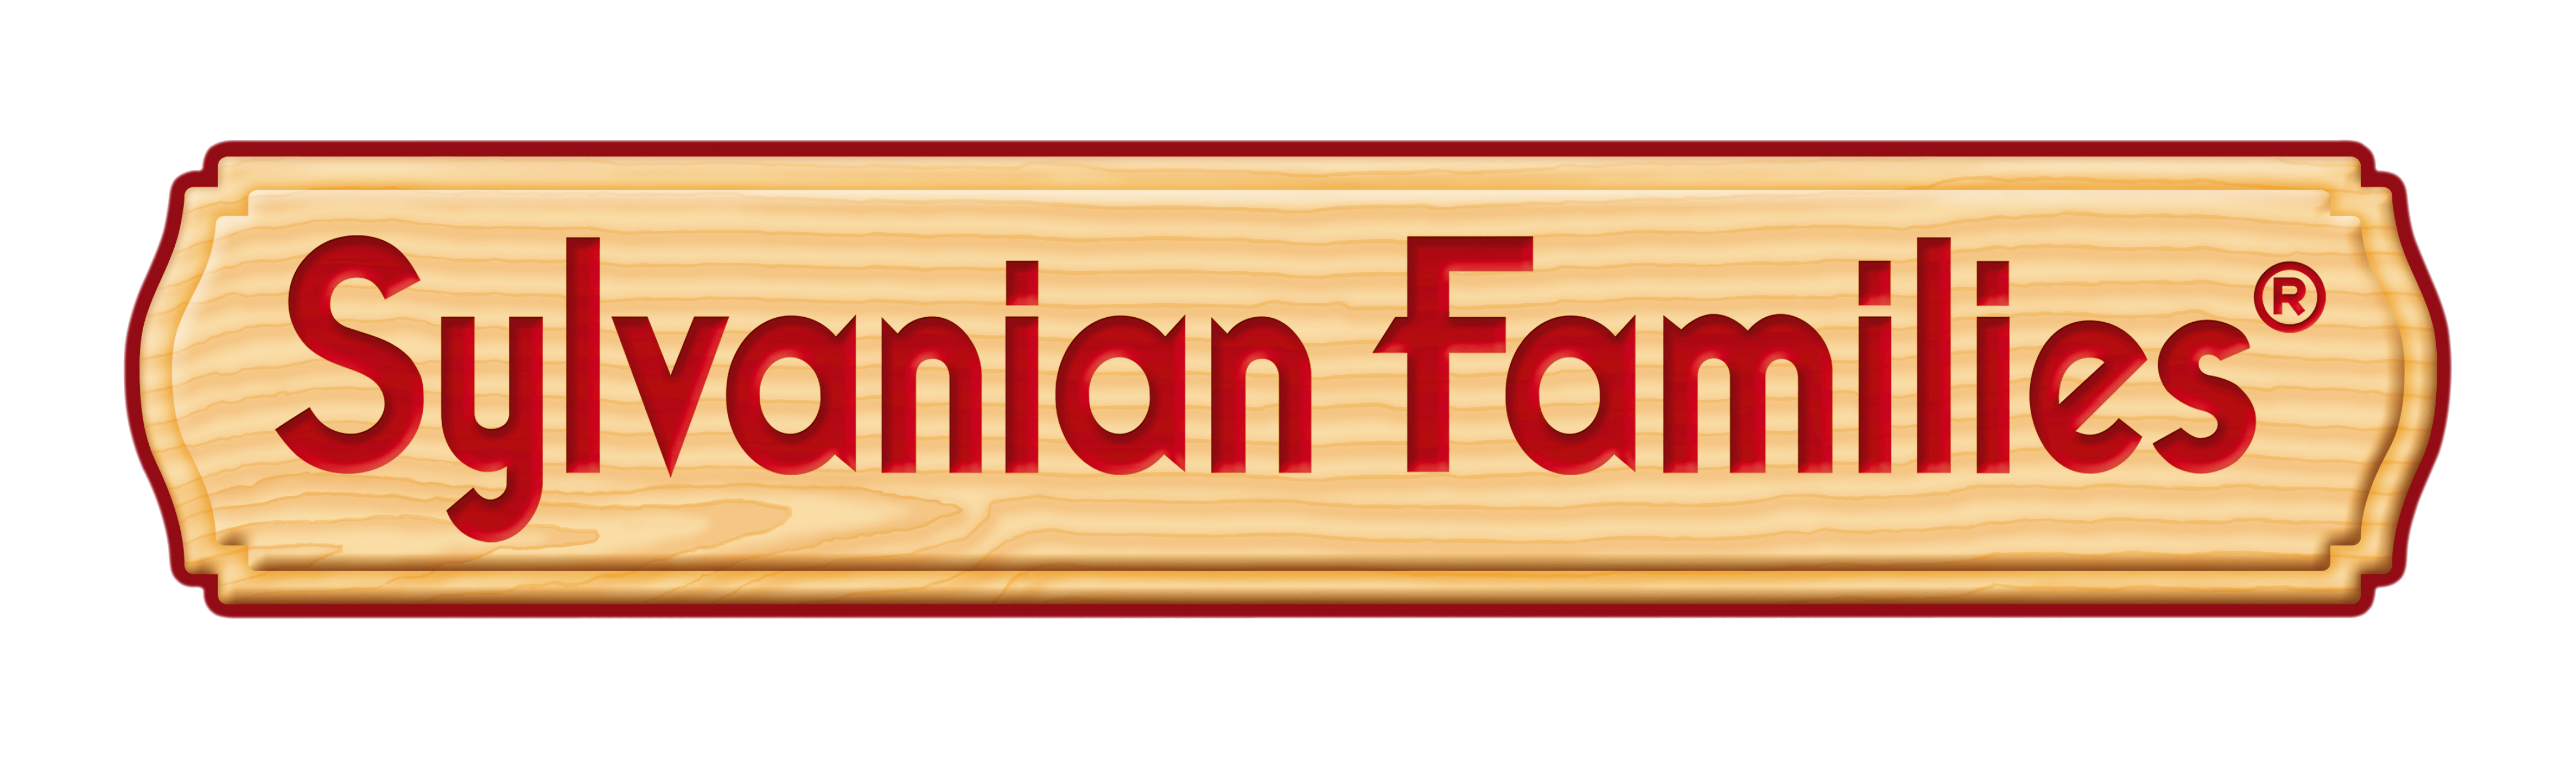 Sylvanian Families -logo